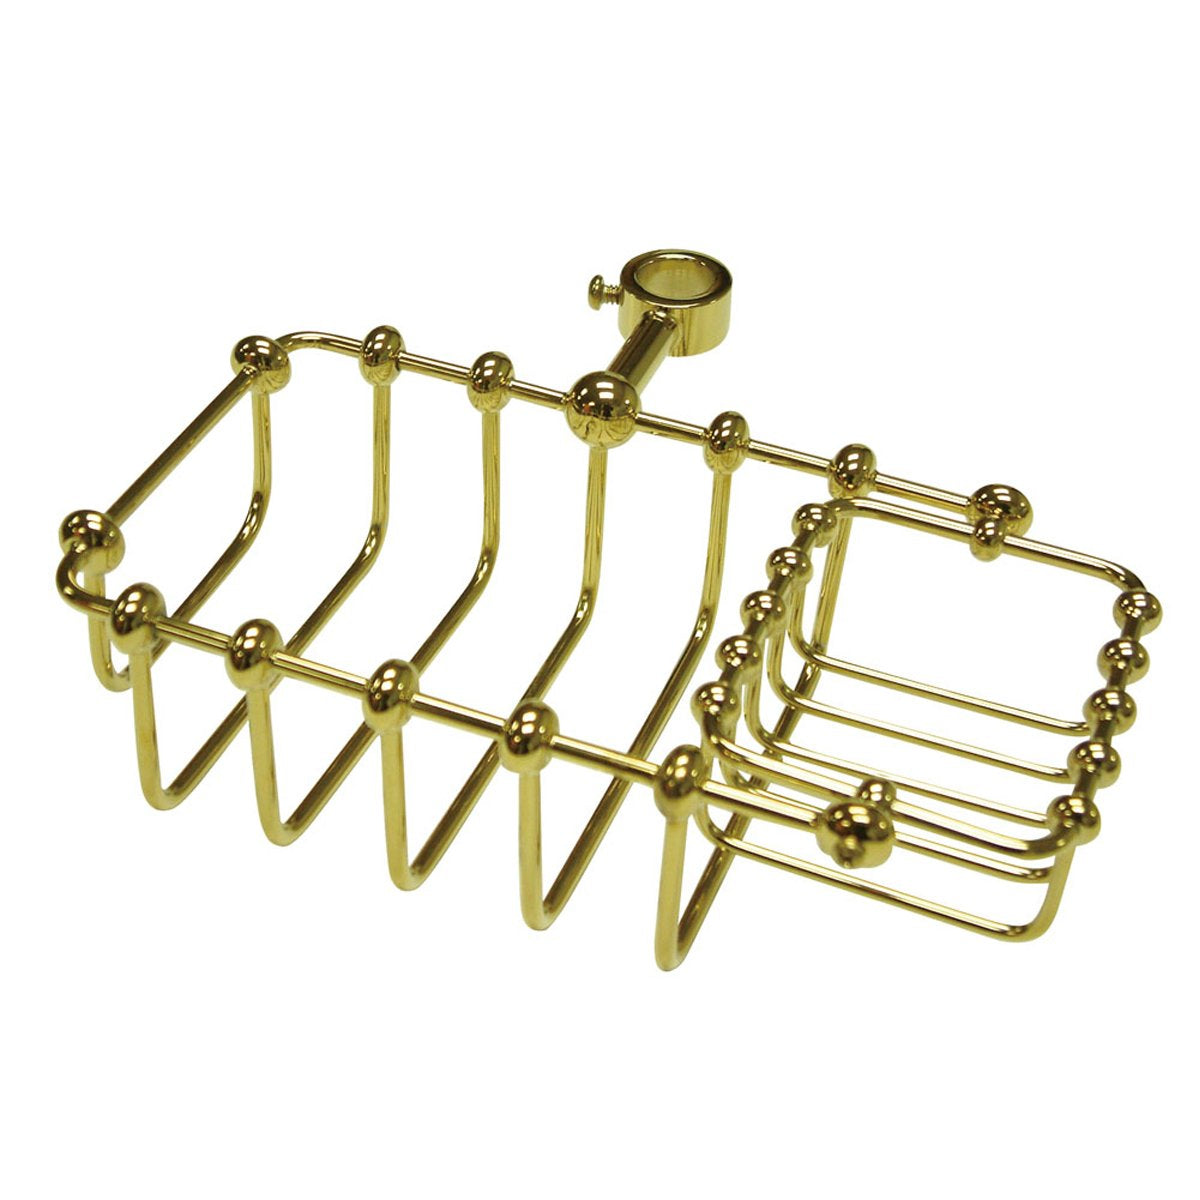 Kingston Brass Vintage Shower Riser Mounted Soap Basket-Bathroom Accessories-Free Shipping-Directsinks.